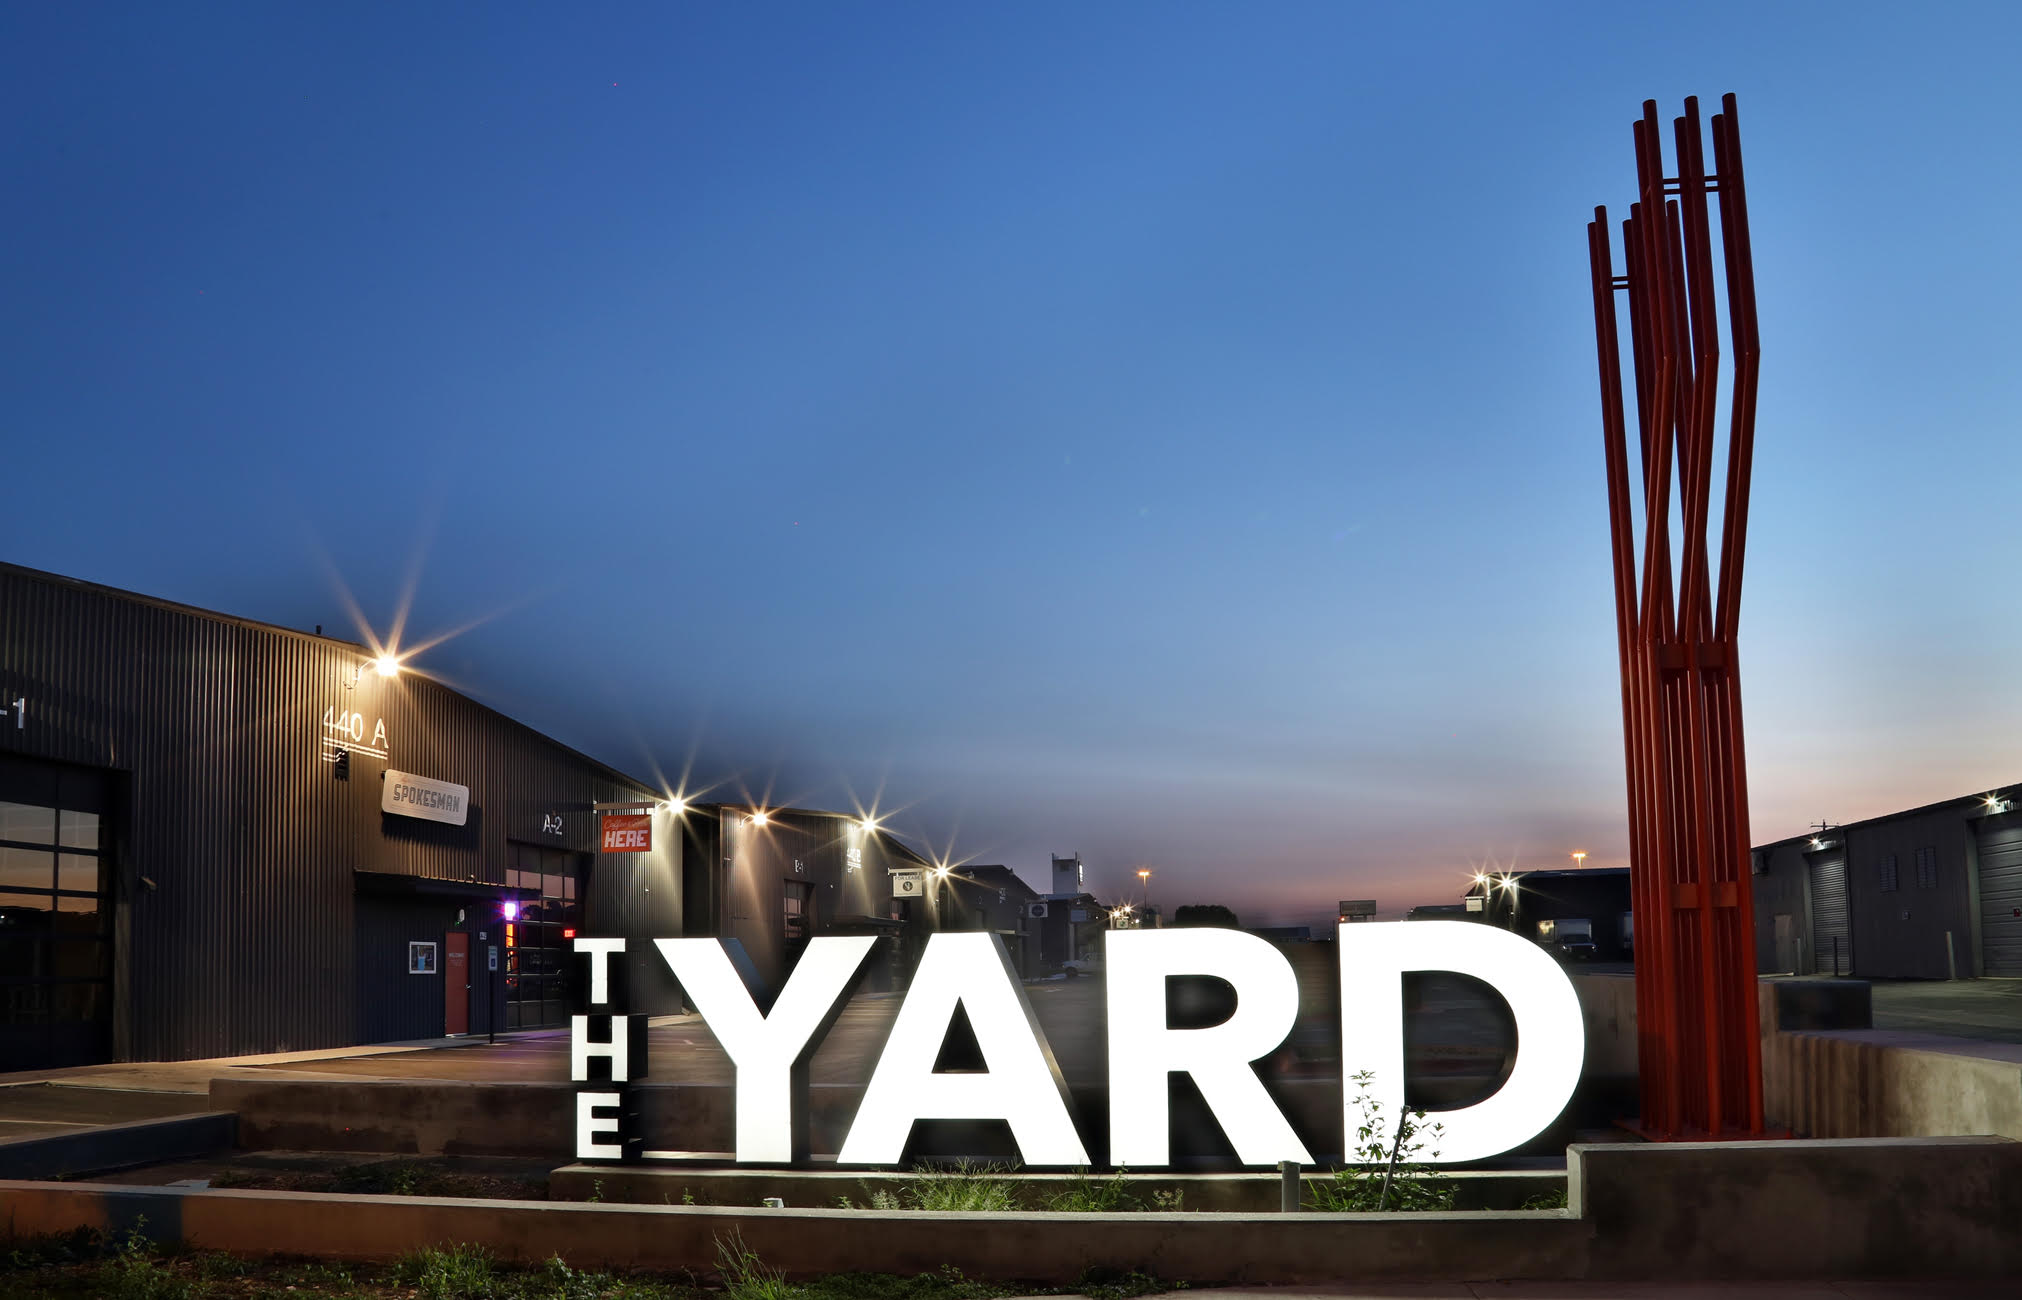 The Yard exterior - Bruce Malone.jpg